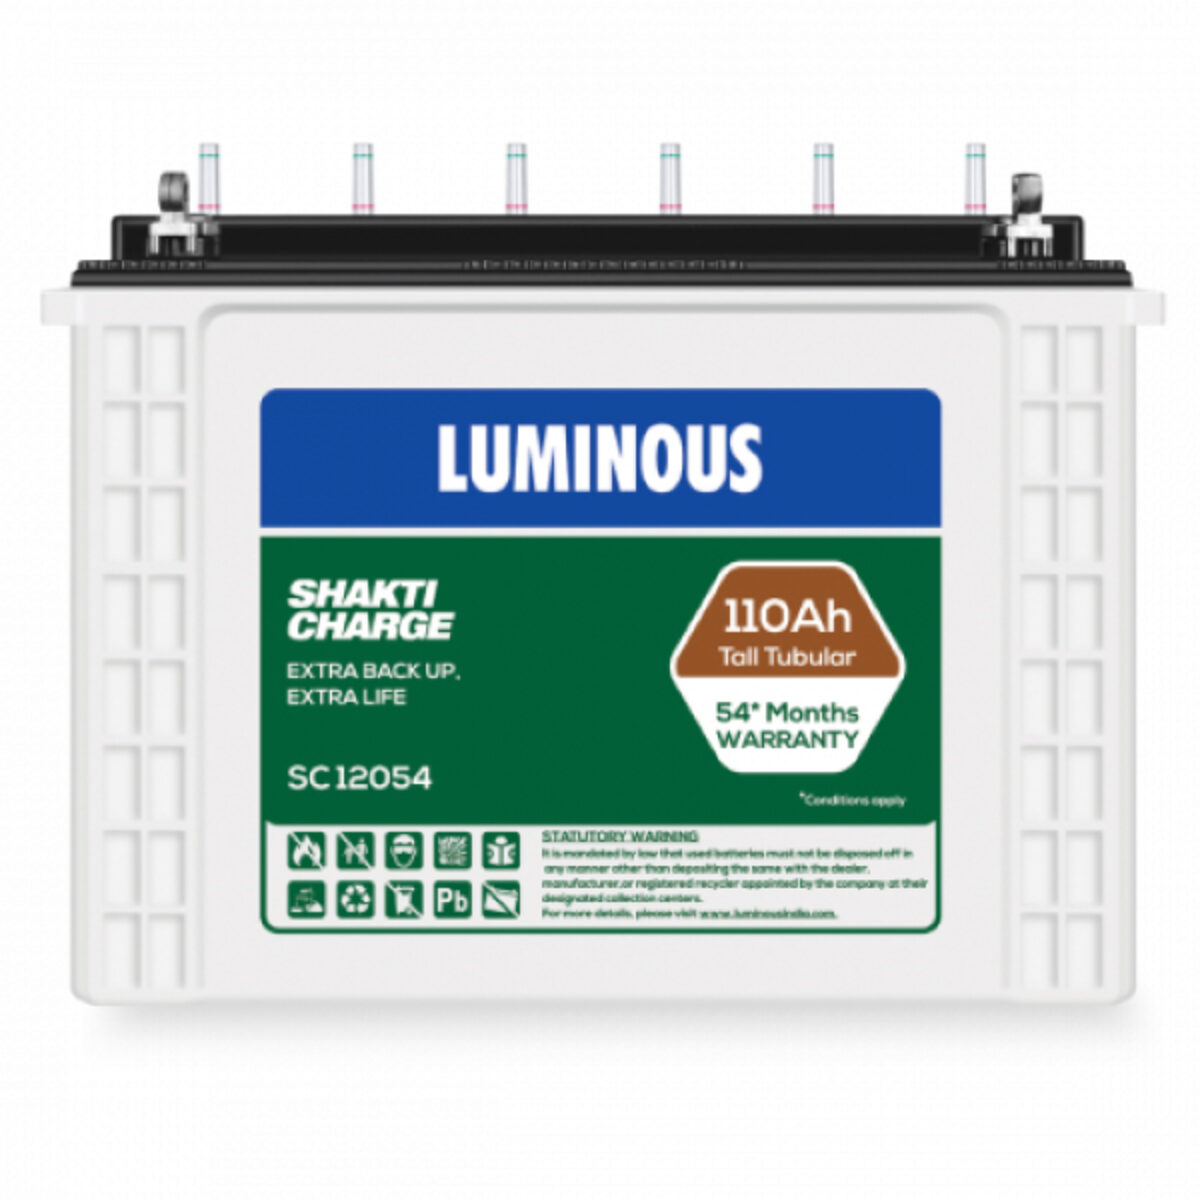 Luminous Shakti Charge Sc 154 110ah Inverter Battery Om Electronics And Batteries Chennai